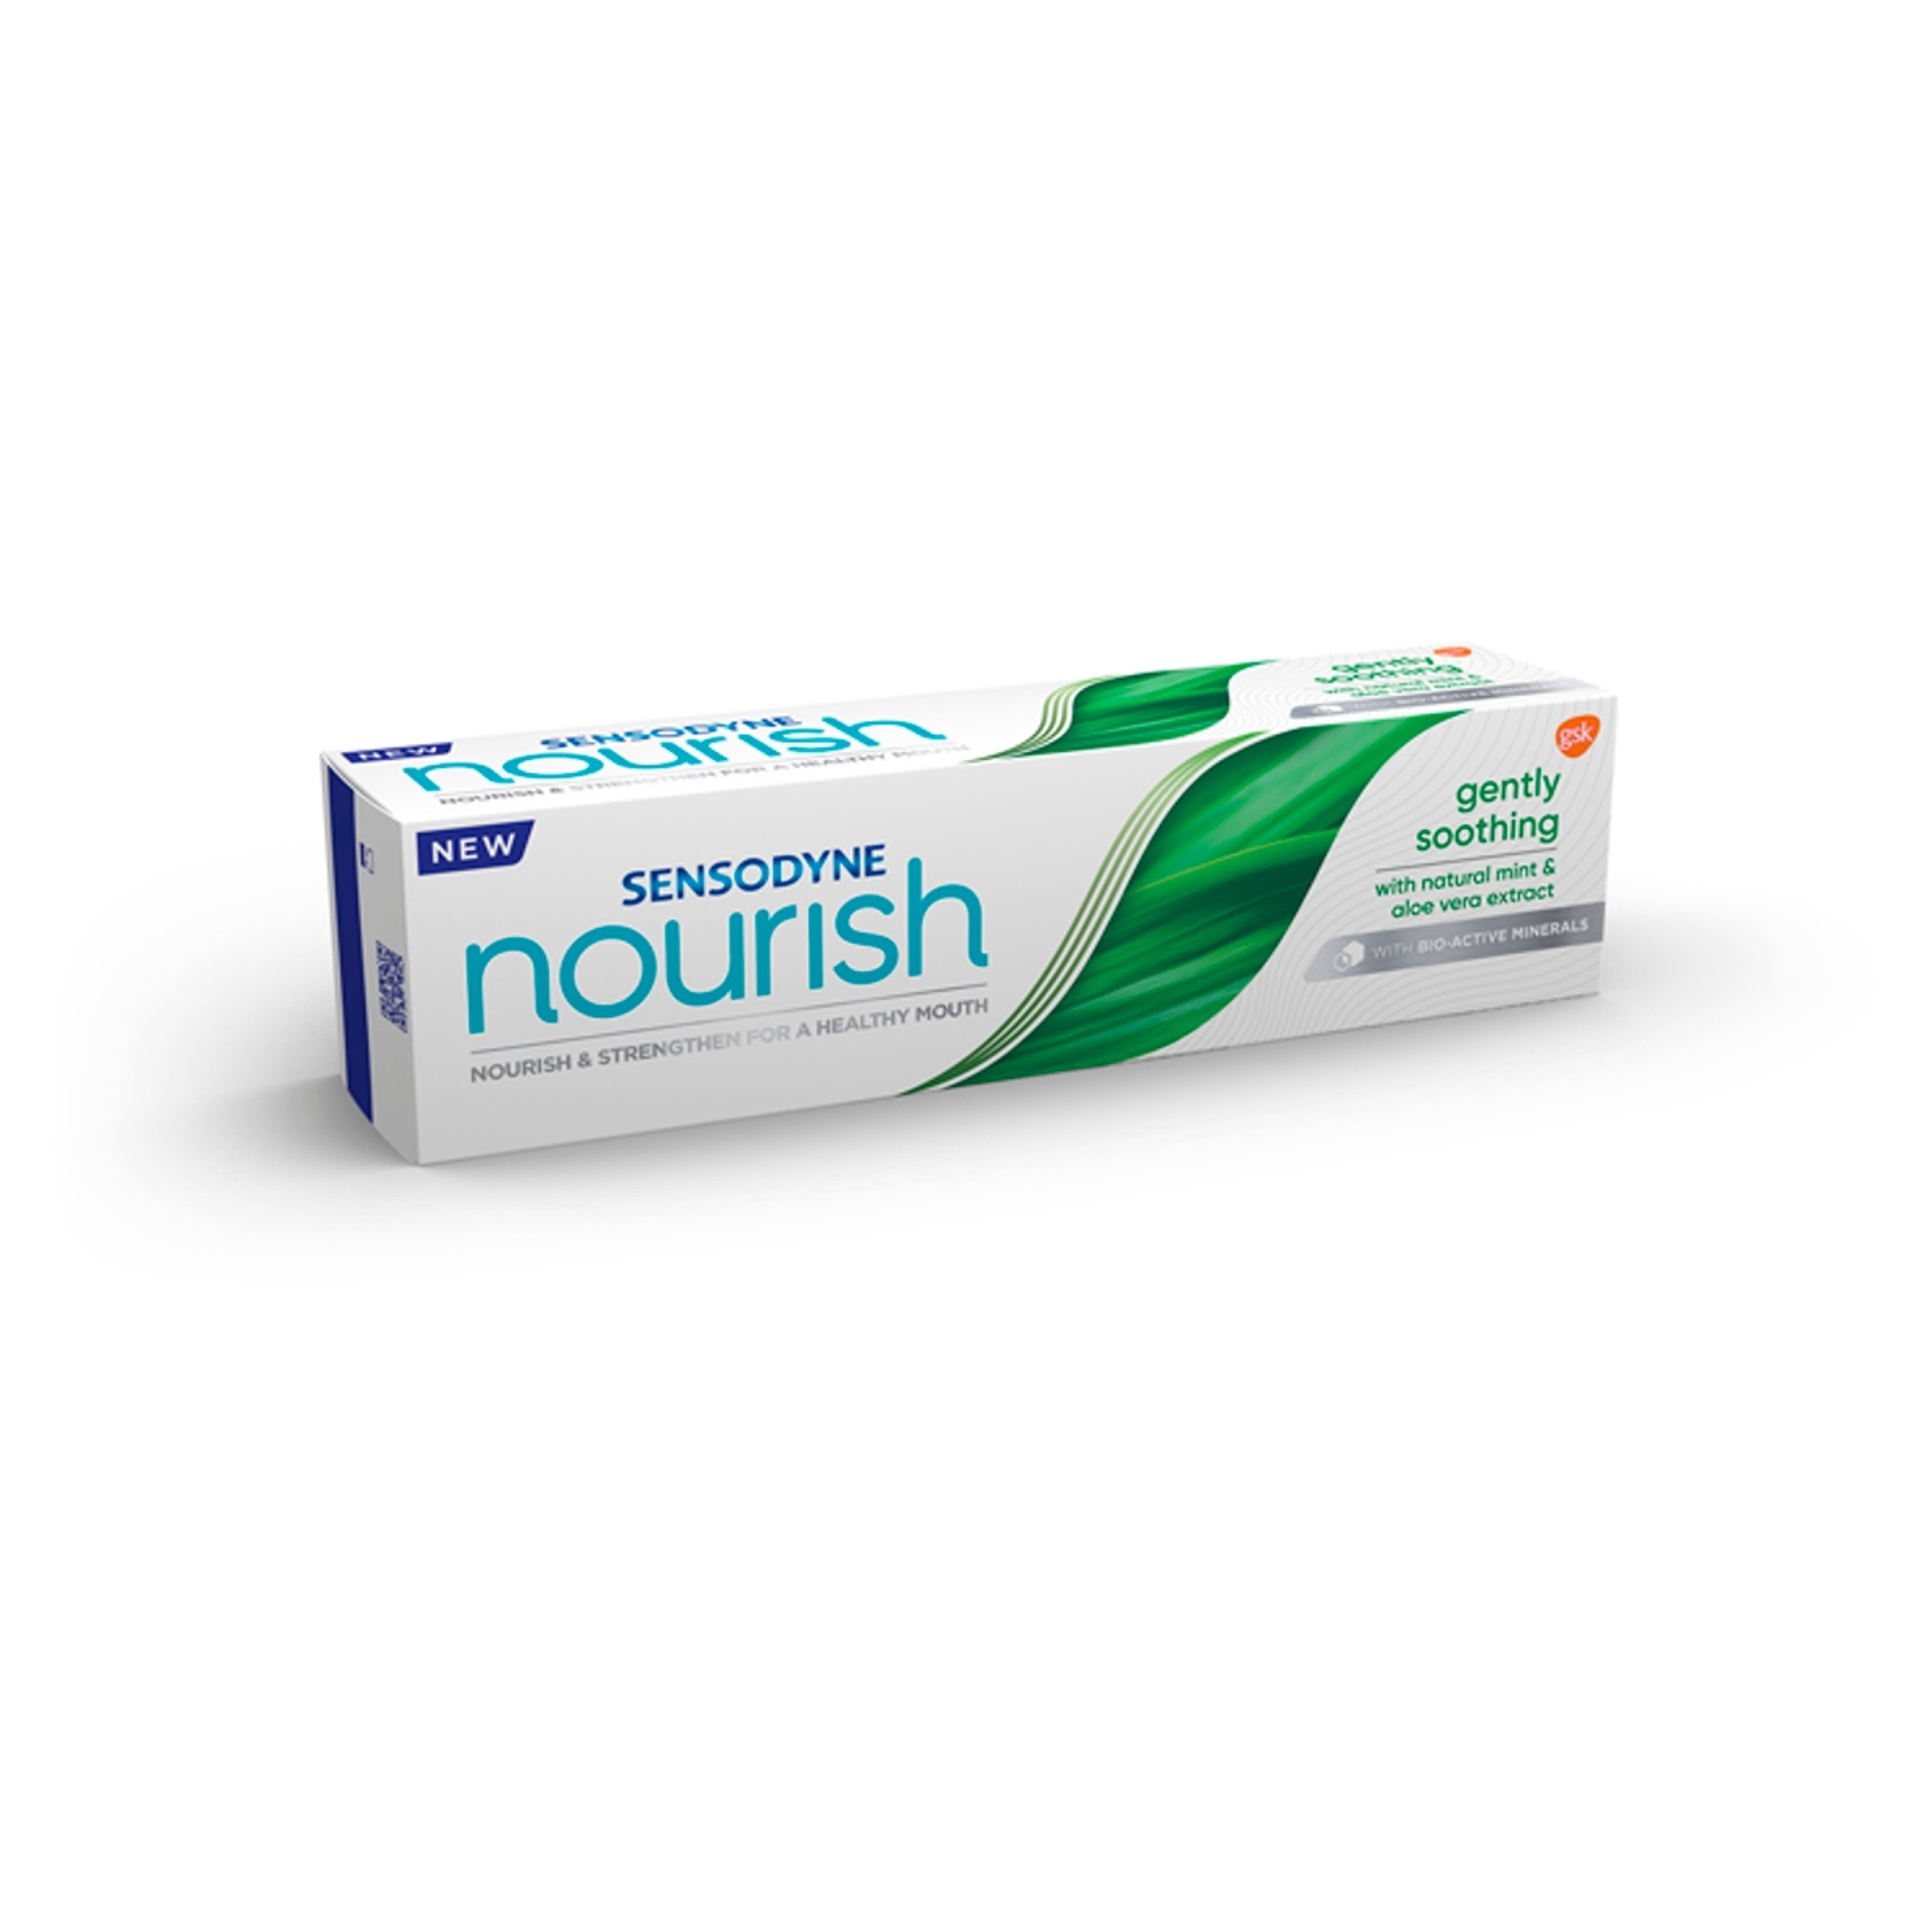 Sensodyne Nourish Gently Soothing fogkrém - 75 ml-3